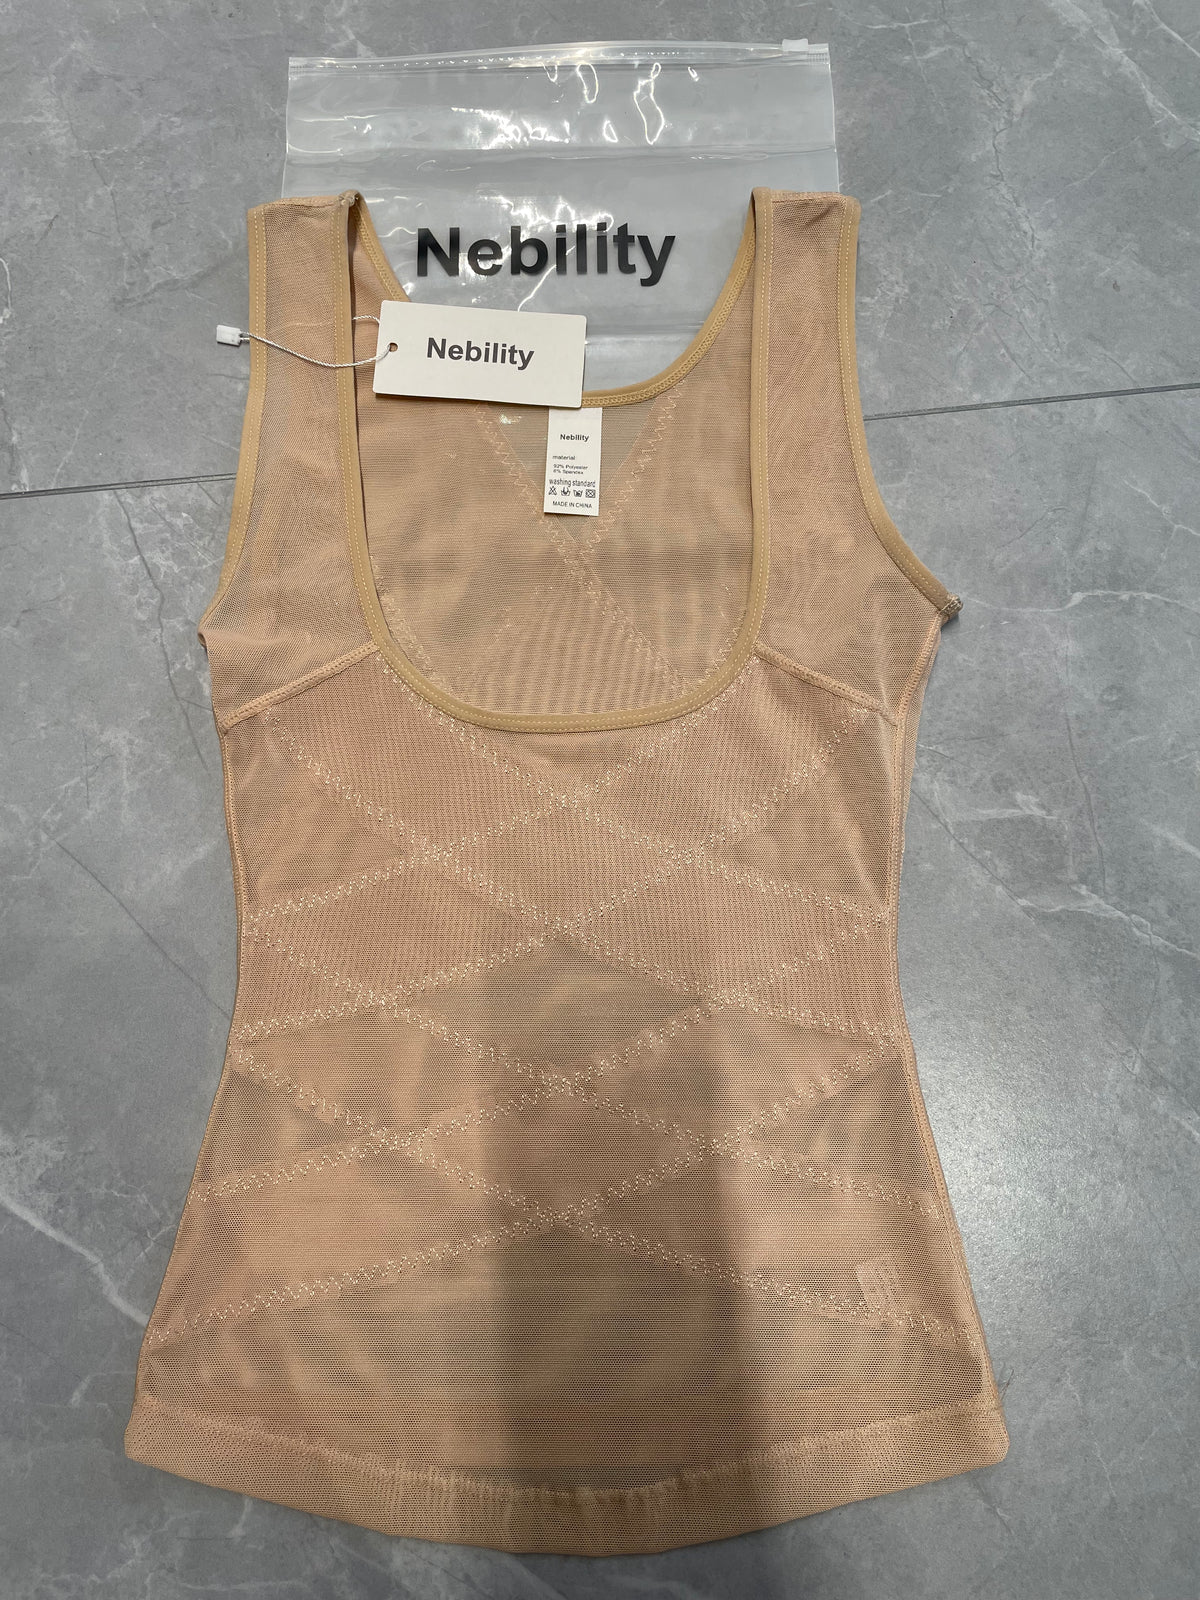 Nebility Full Mesh Body Shaper for Women Tummy Control Shapewear Compression Tanks Cami Tops